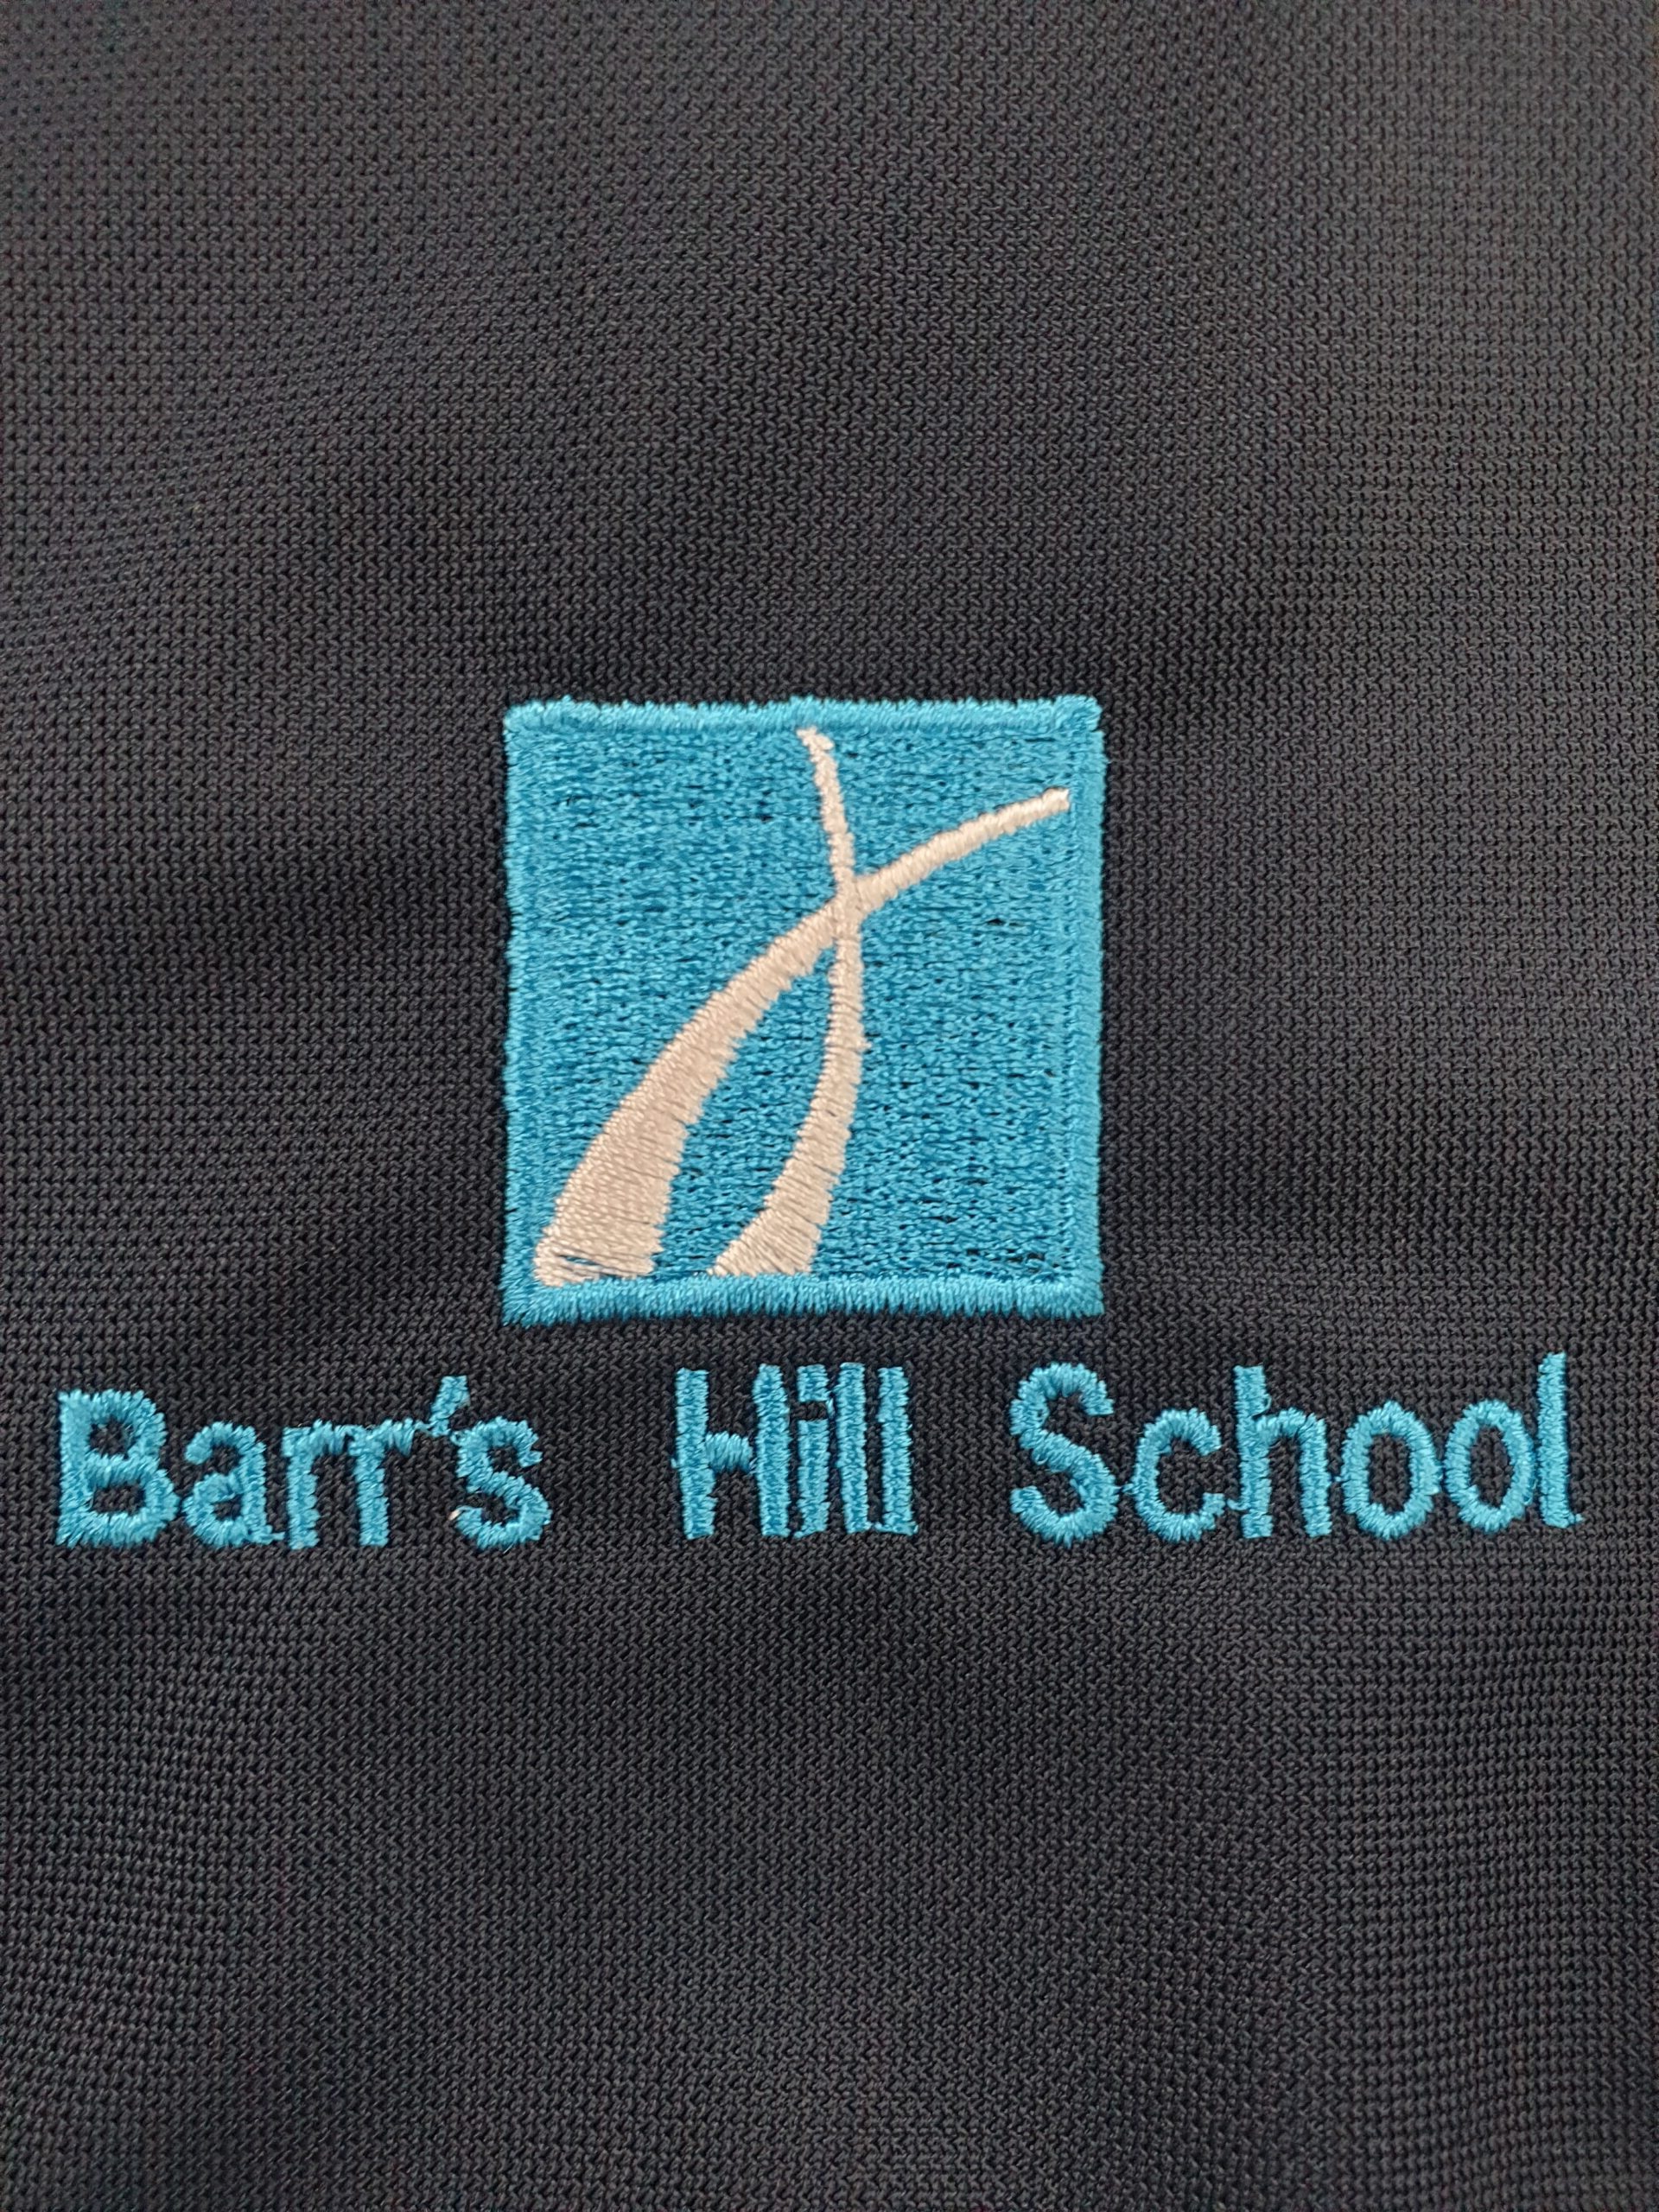 Barrs Hill